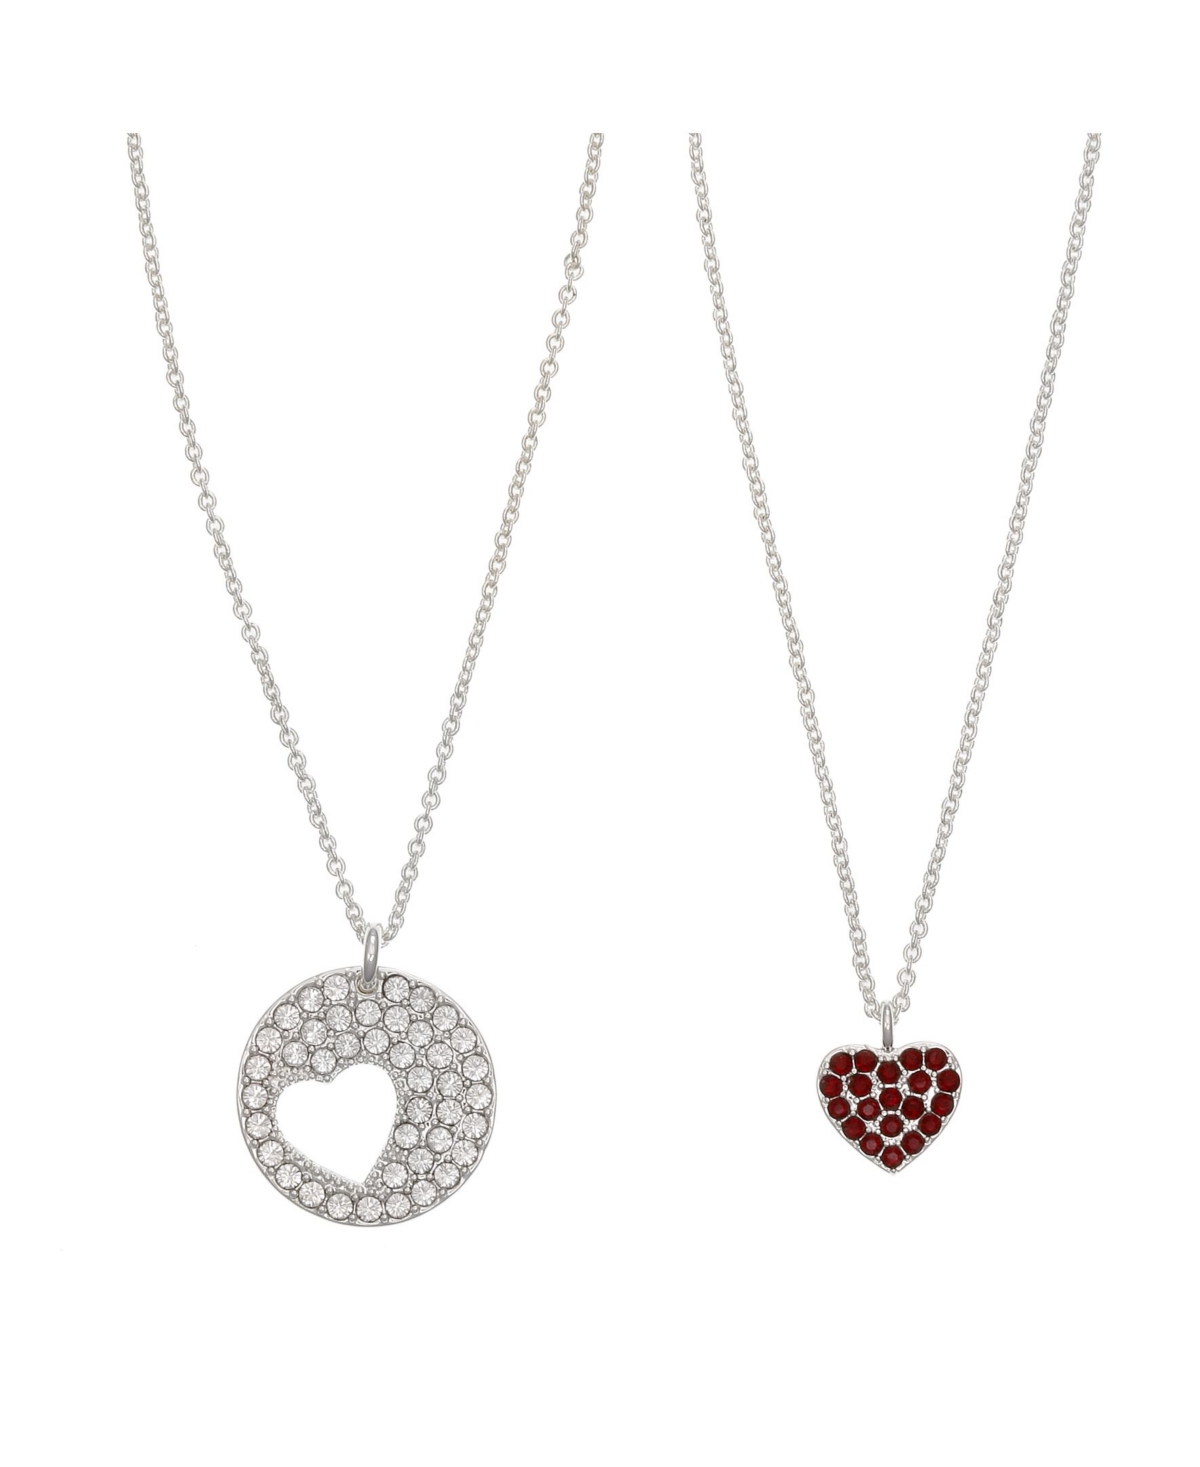 Fao Schwarz Women's Heart Pendant with Cubic Zirconia Stone Accents Necklace Set, 2 Piece